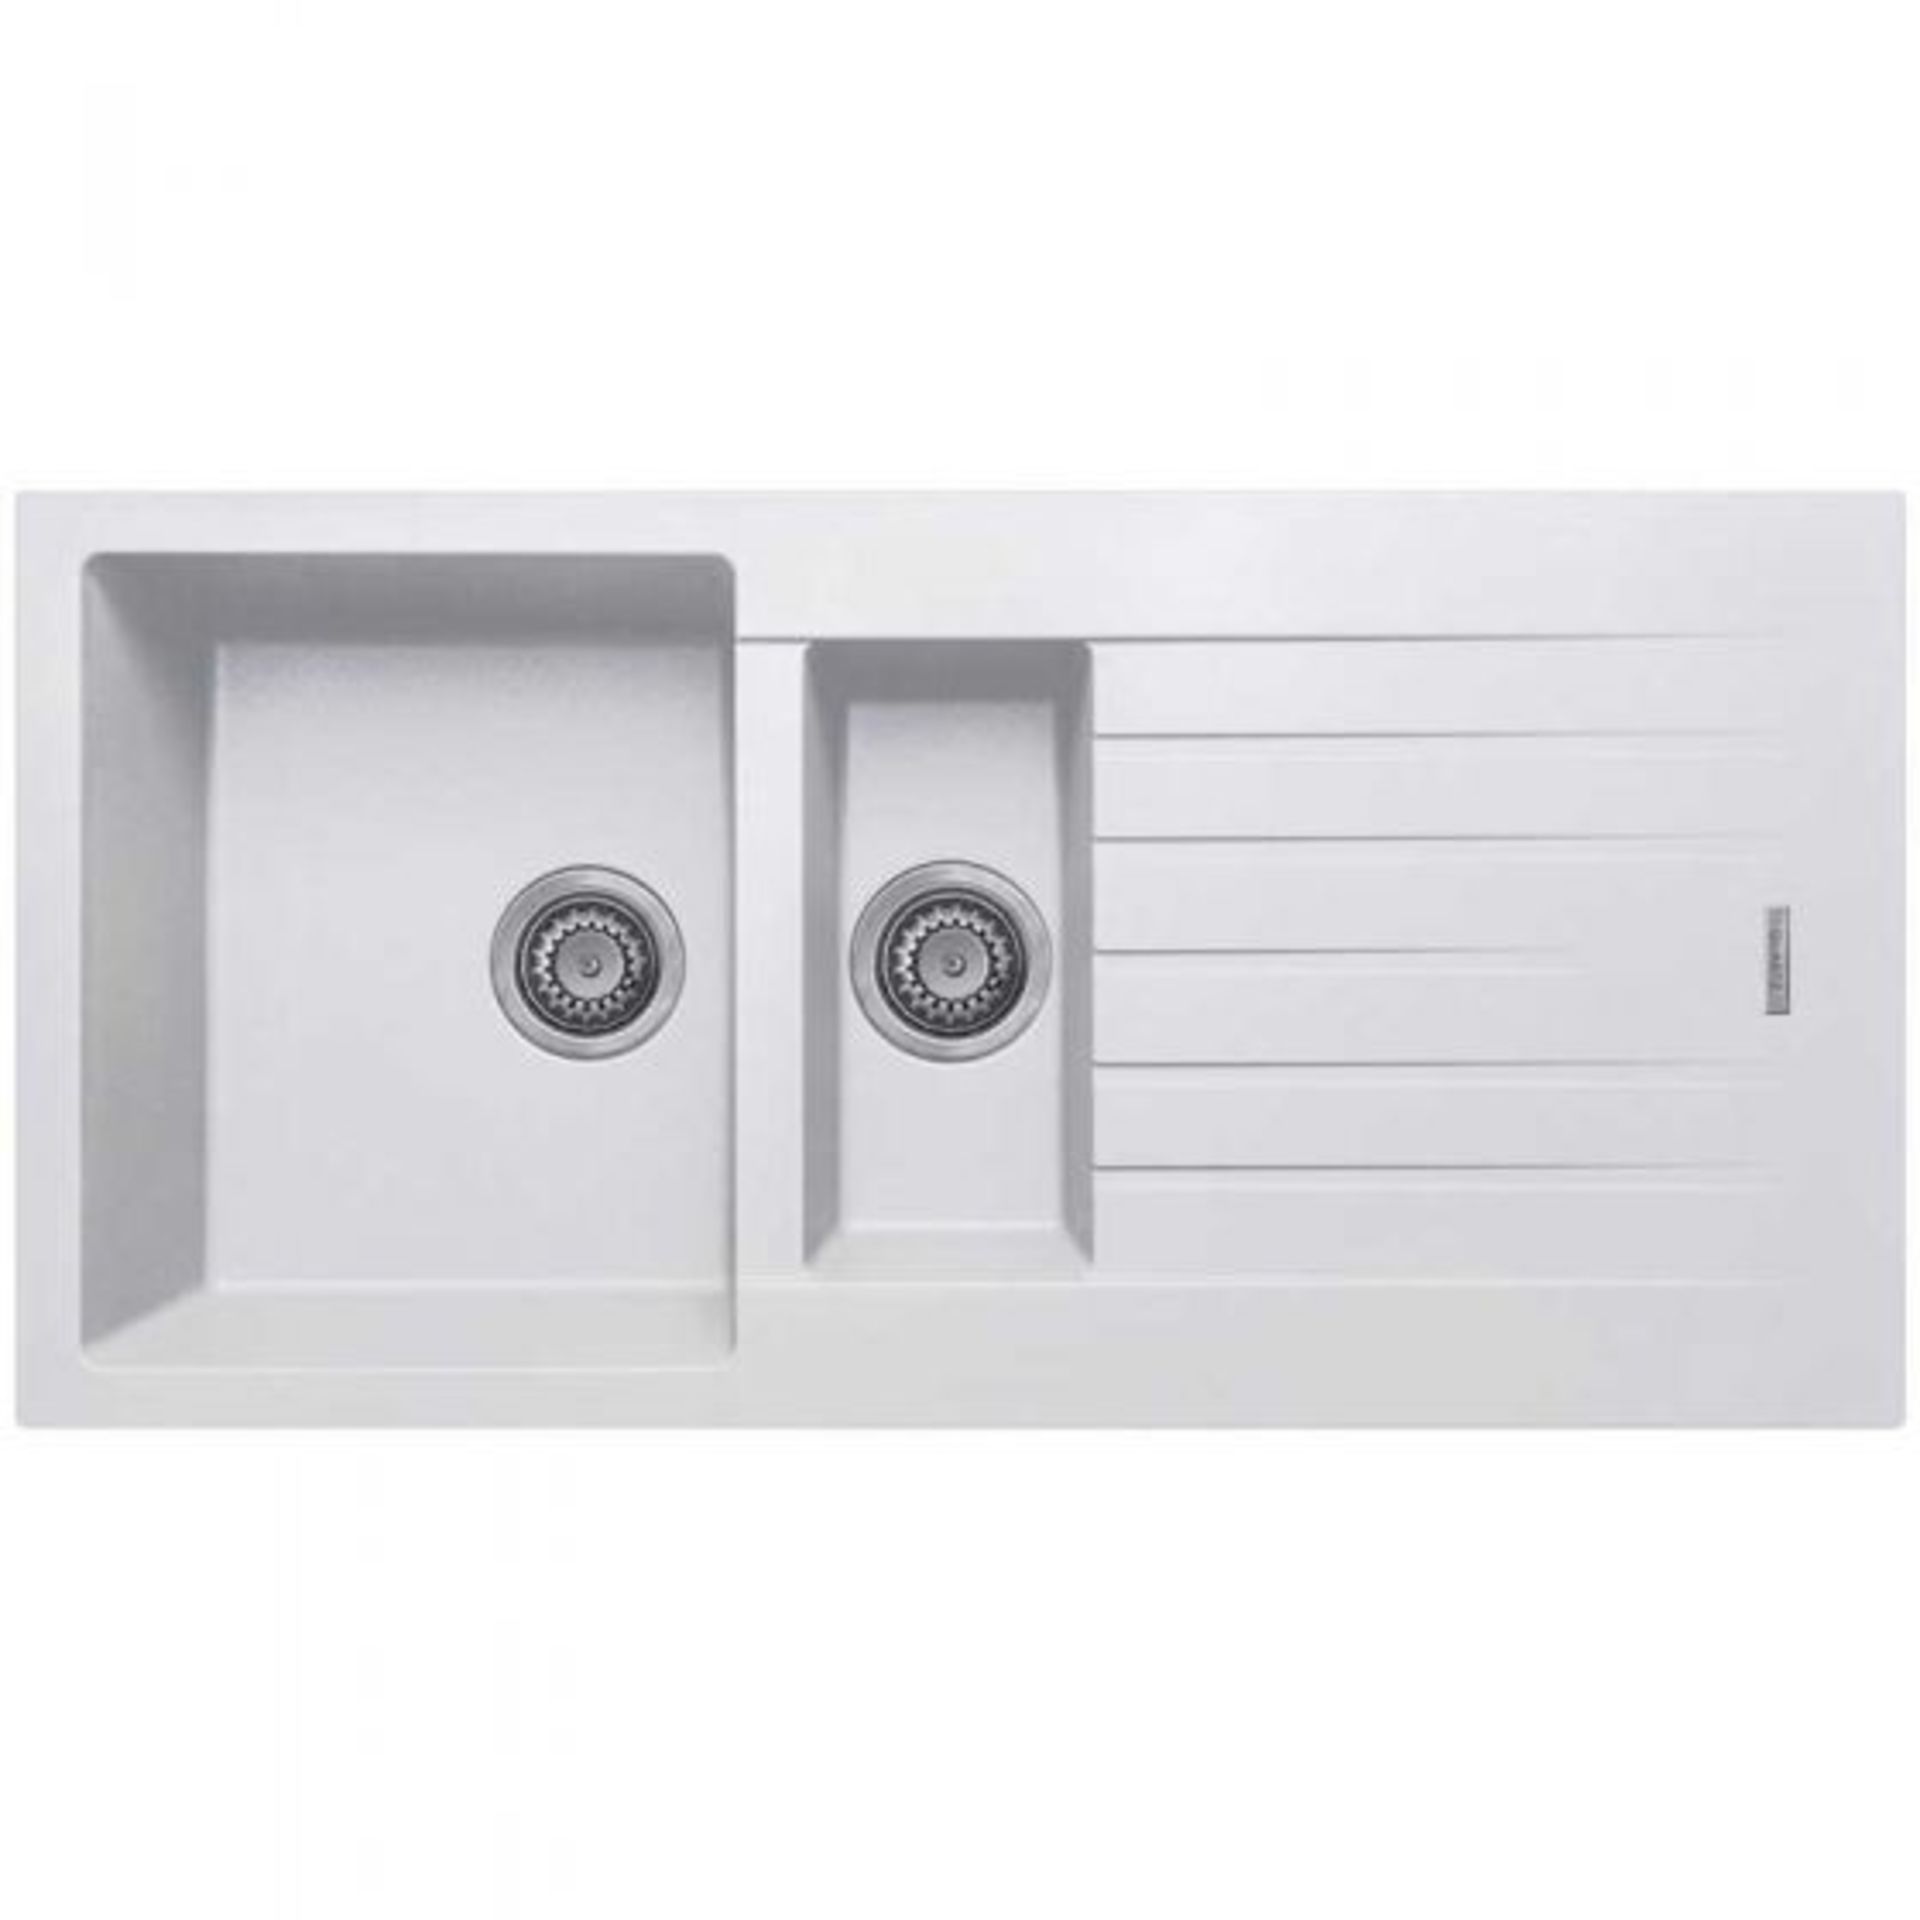 (B15d) New Prima+ Granite 1.5B & Drainer Inset Kitchen Sink - White - CPR315. RRP £272.00.